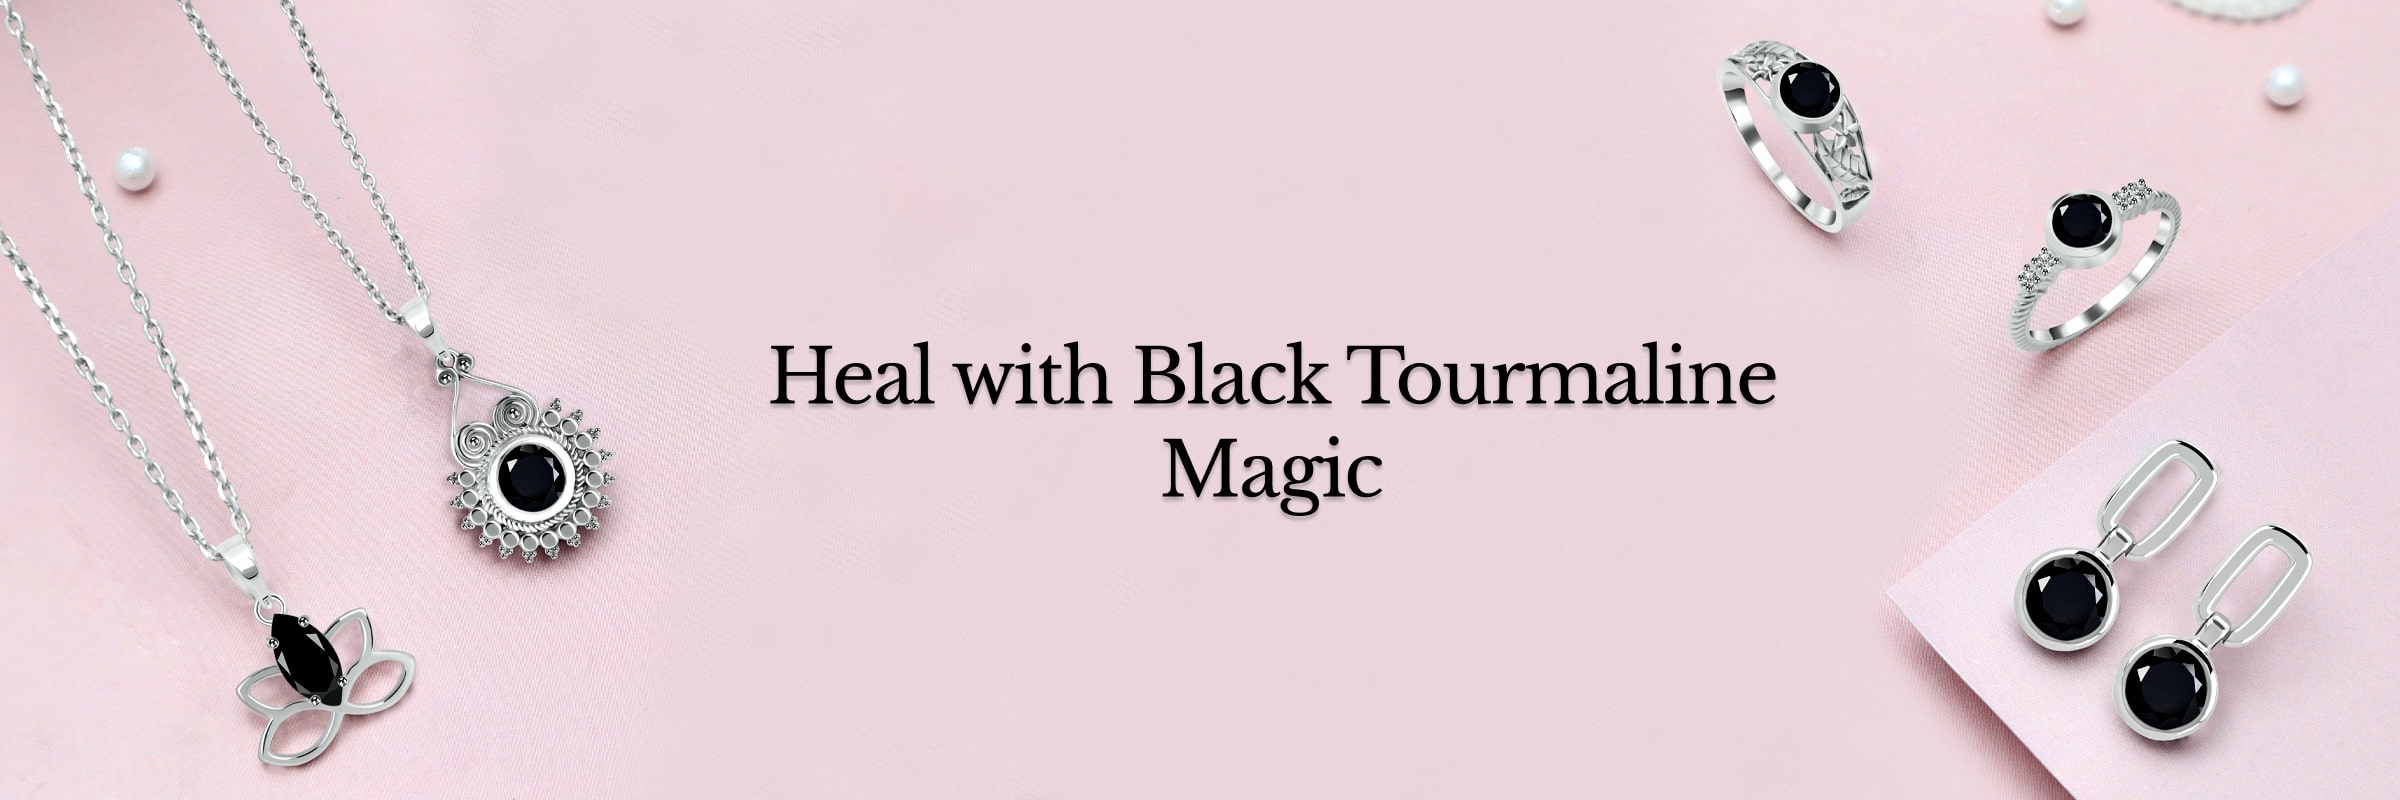 Healing Properties of Black Tourmaline